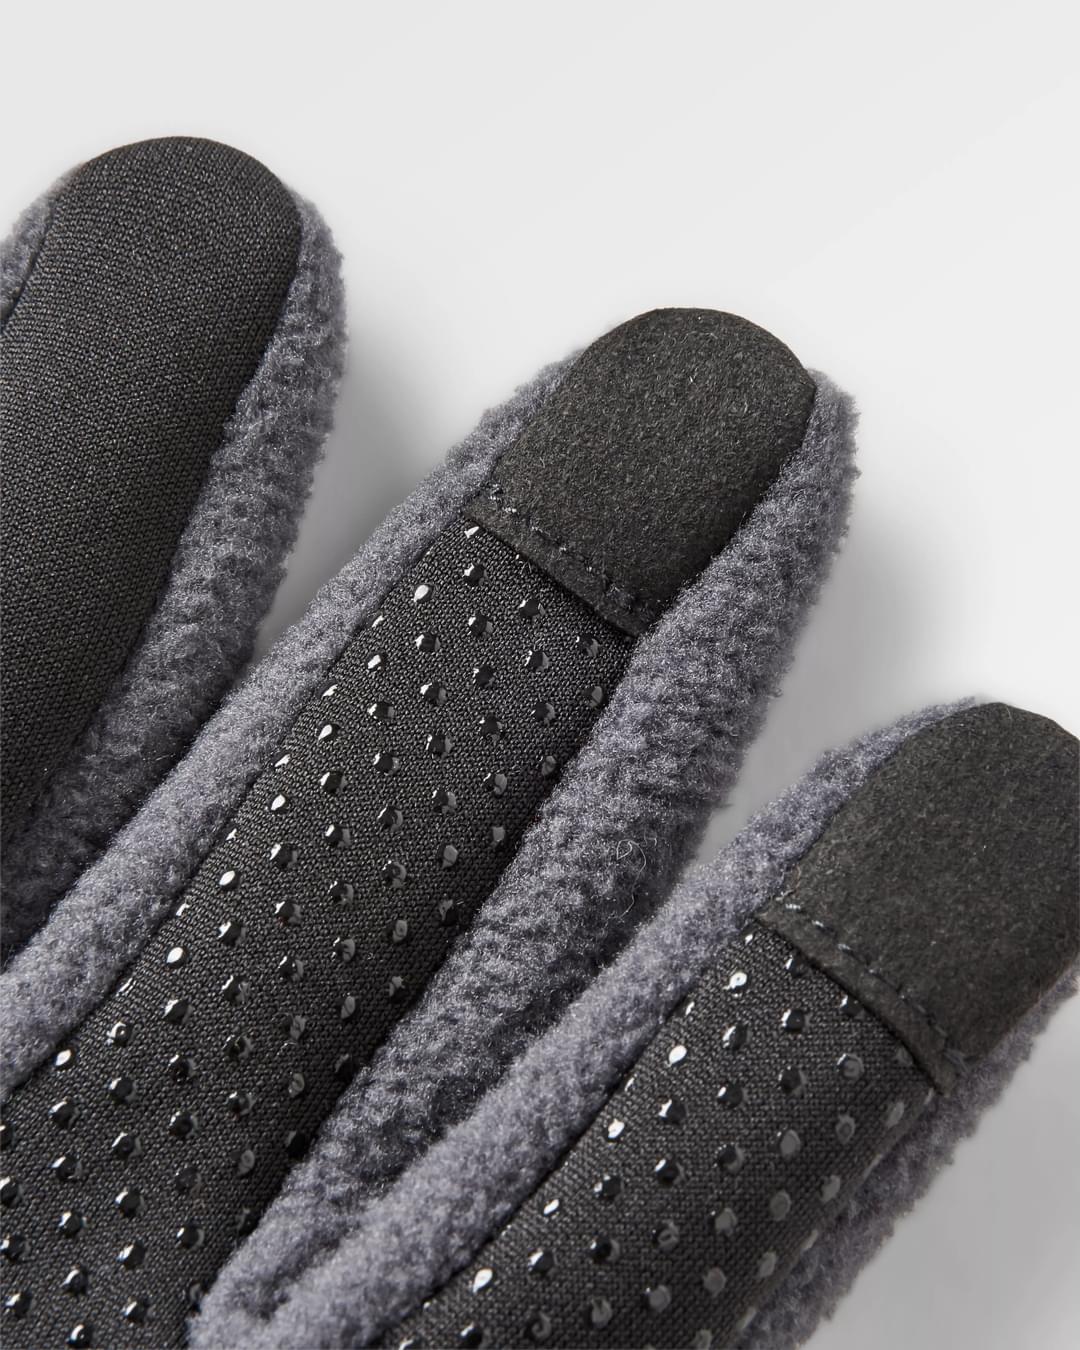 Daytrip Recycled Polar Fleece Touch Screen Gloves Zen - Charcoal